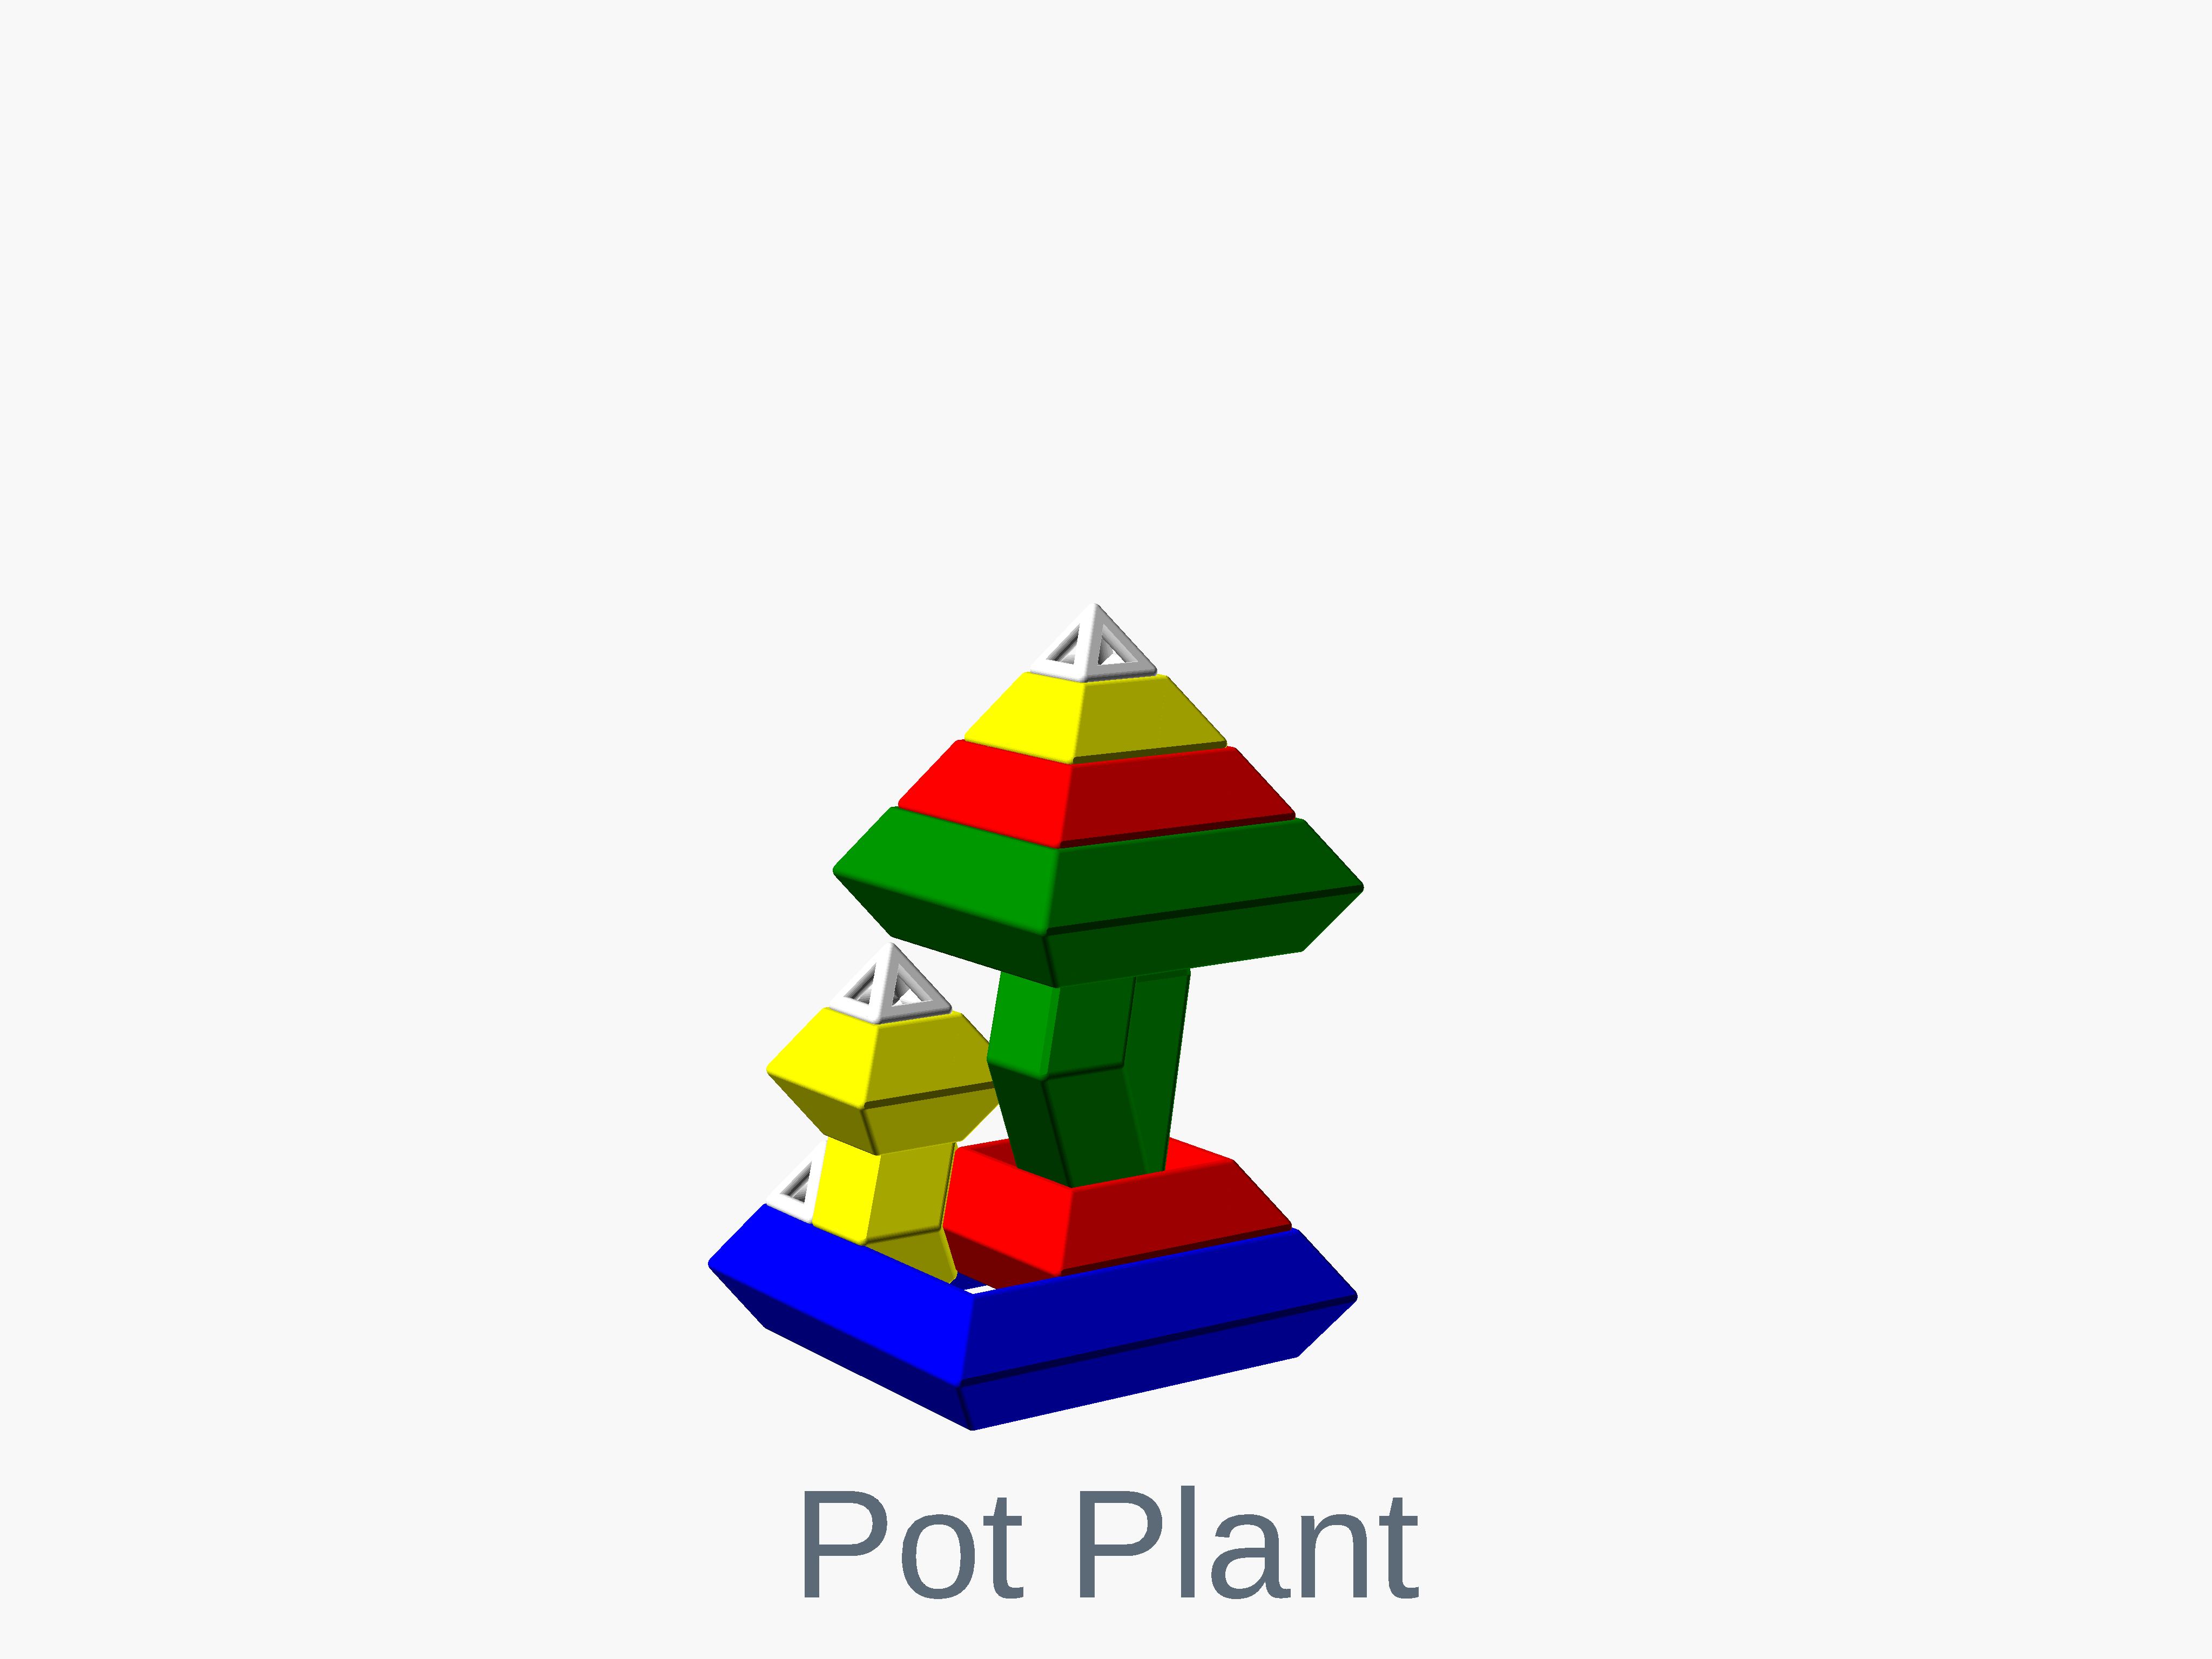 Octahedron potplant